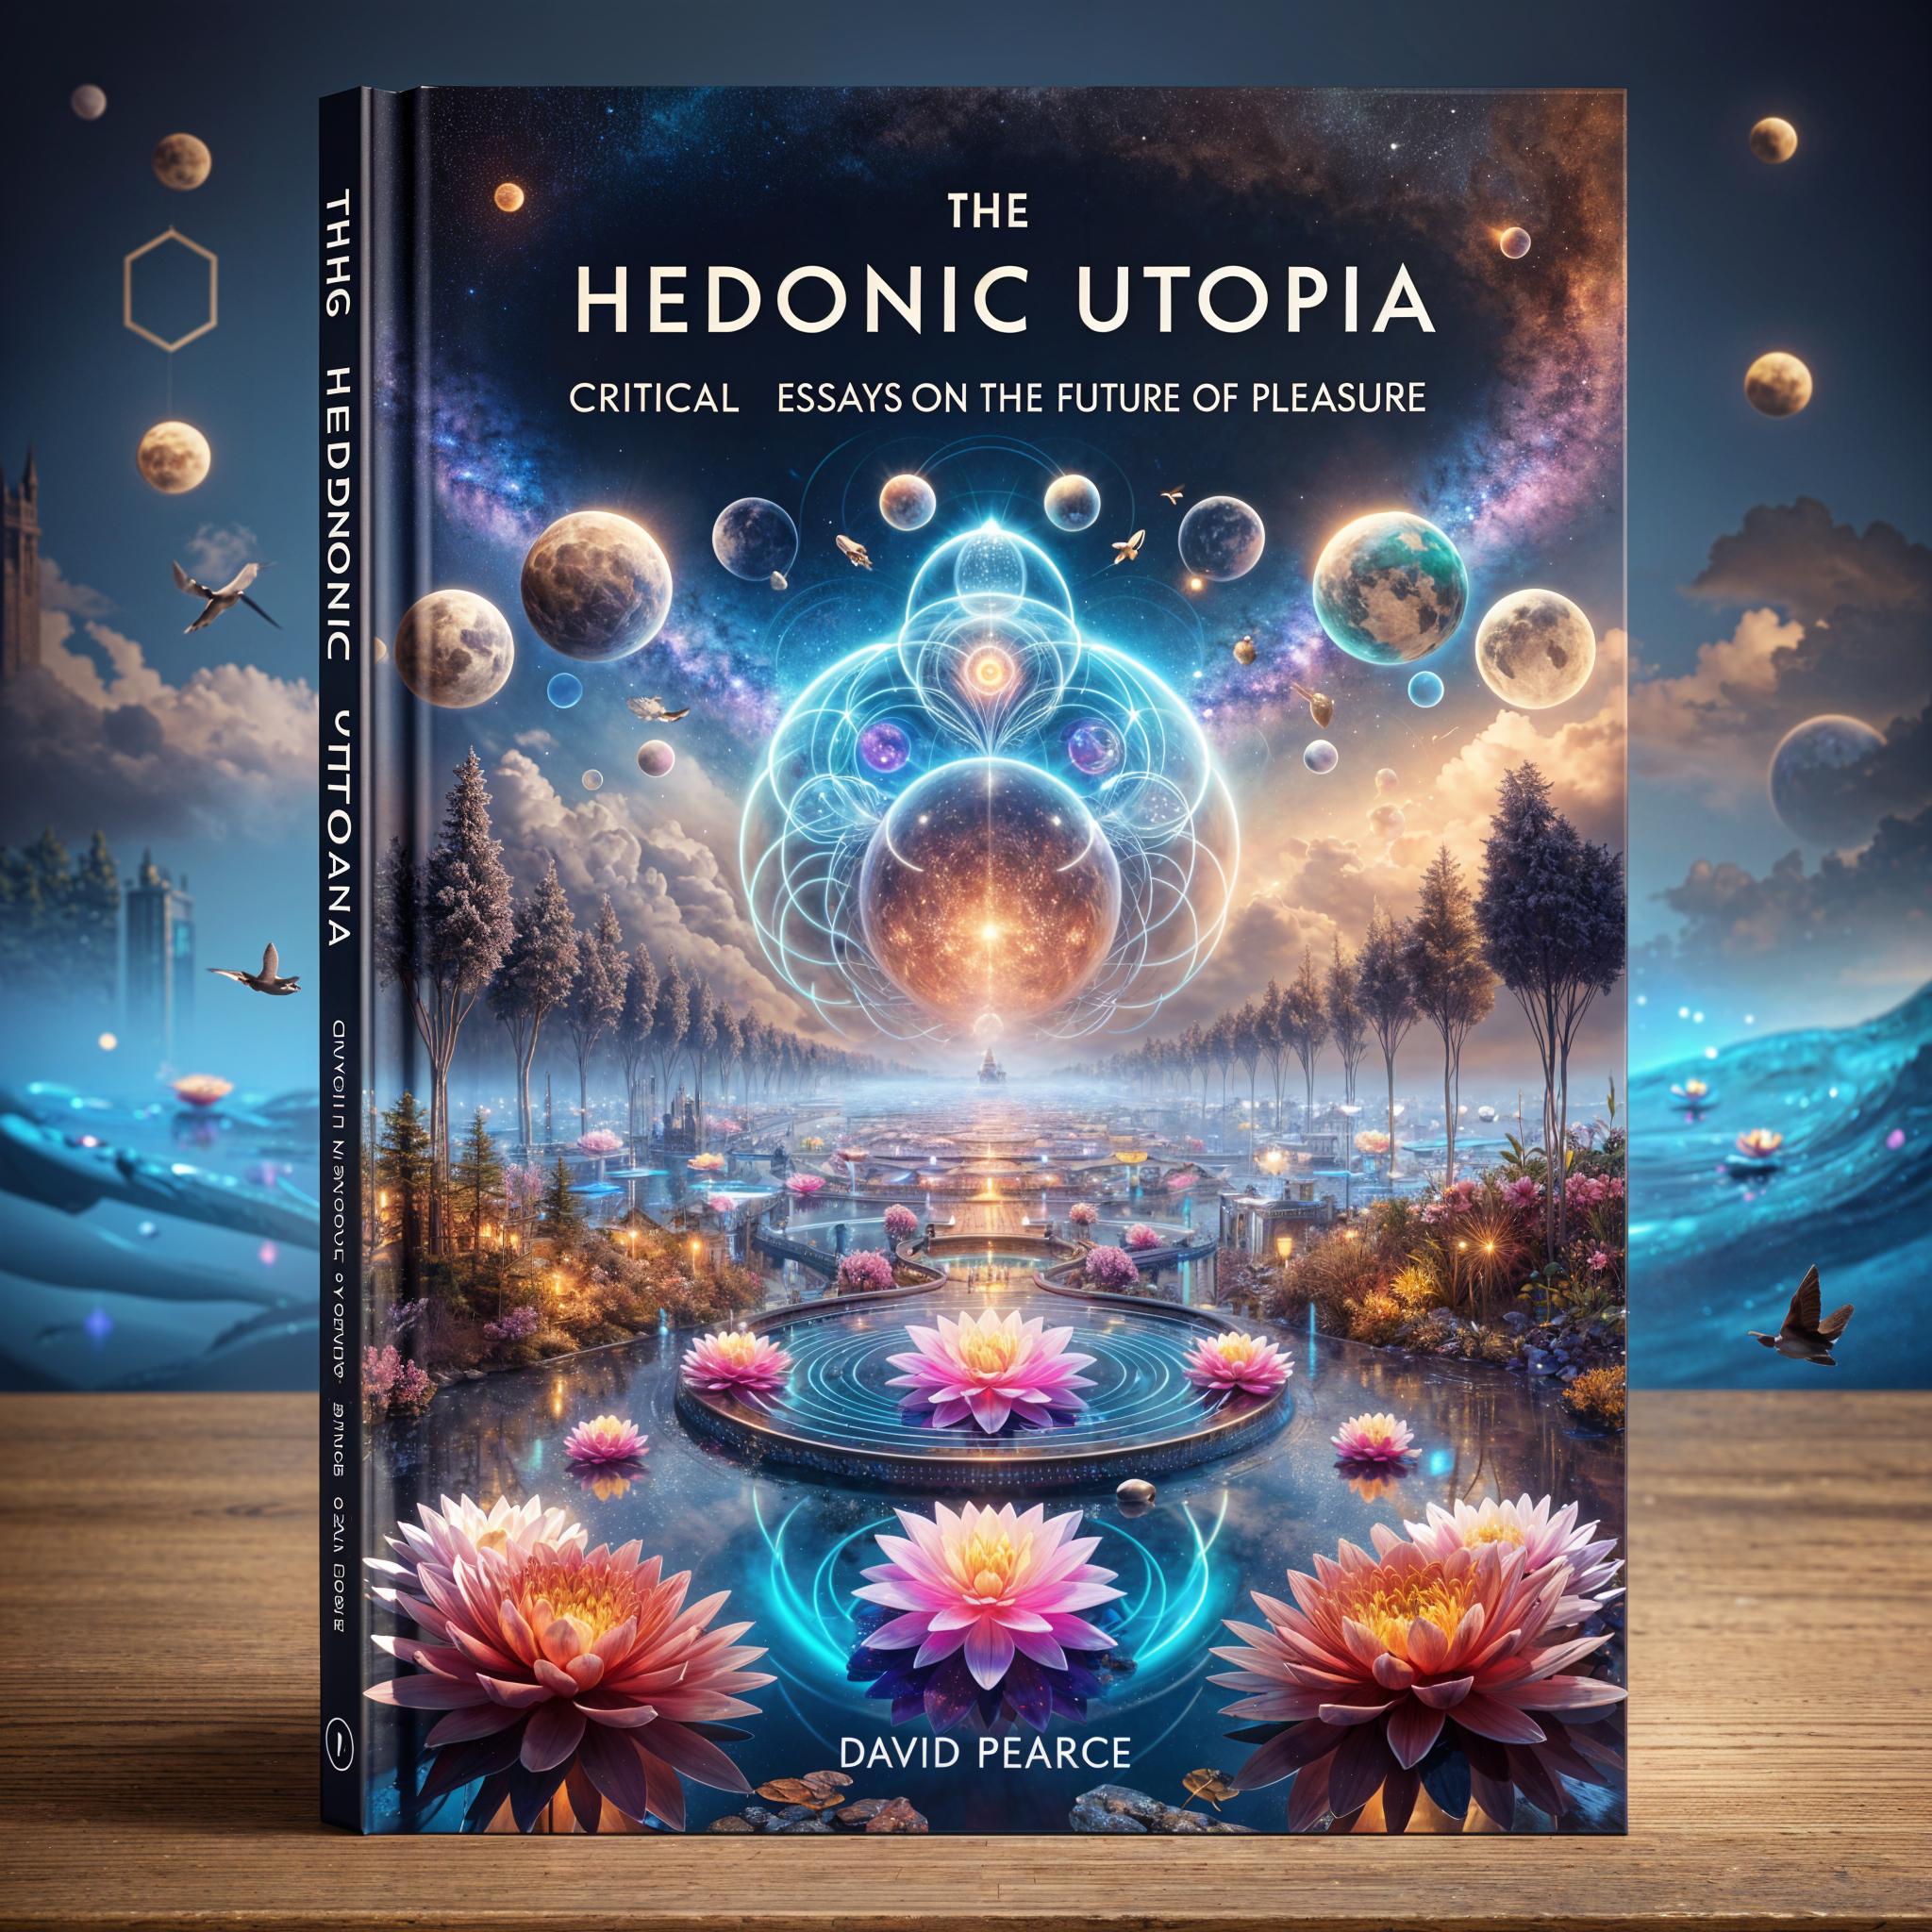 Hedonic Utopia: Critical Essays on the Future of Pleasure by David Pearce